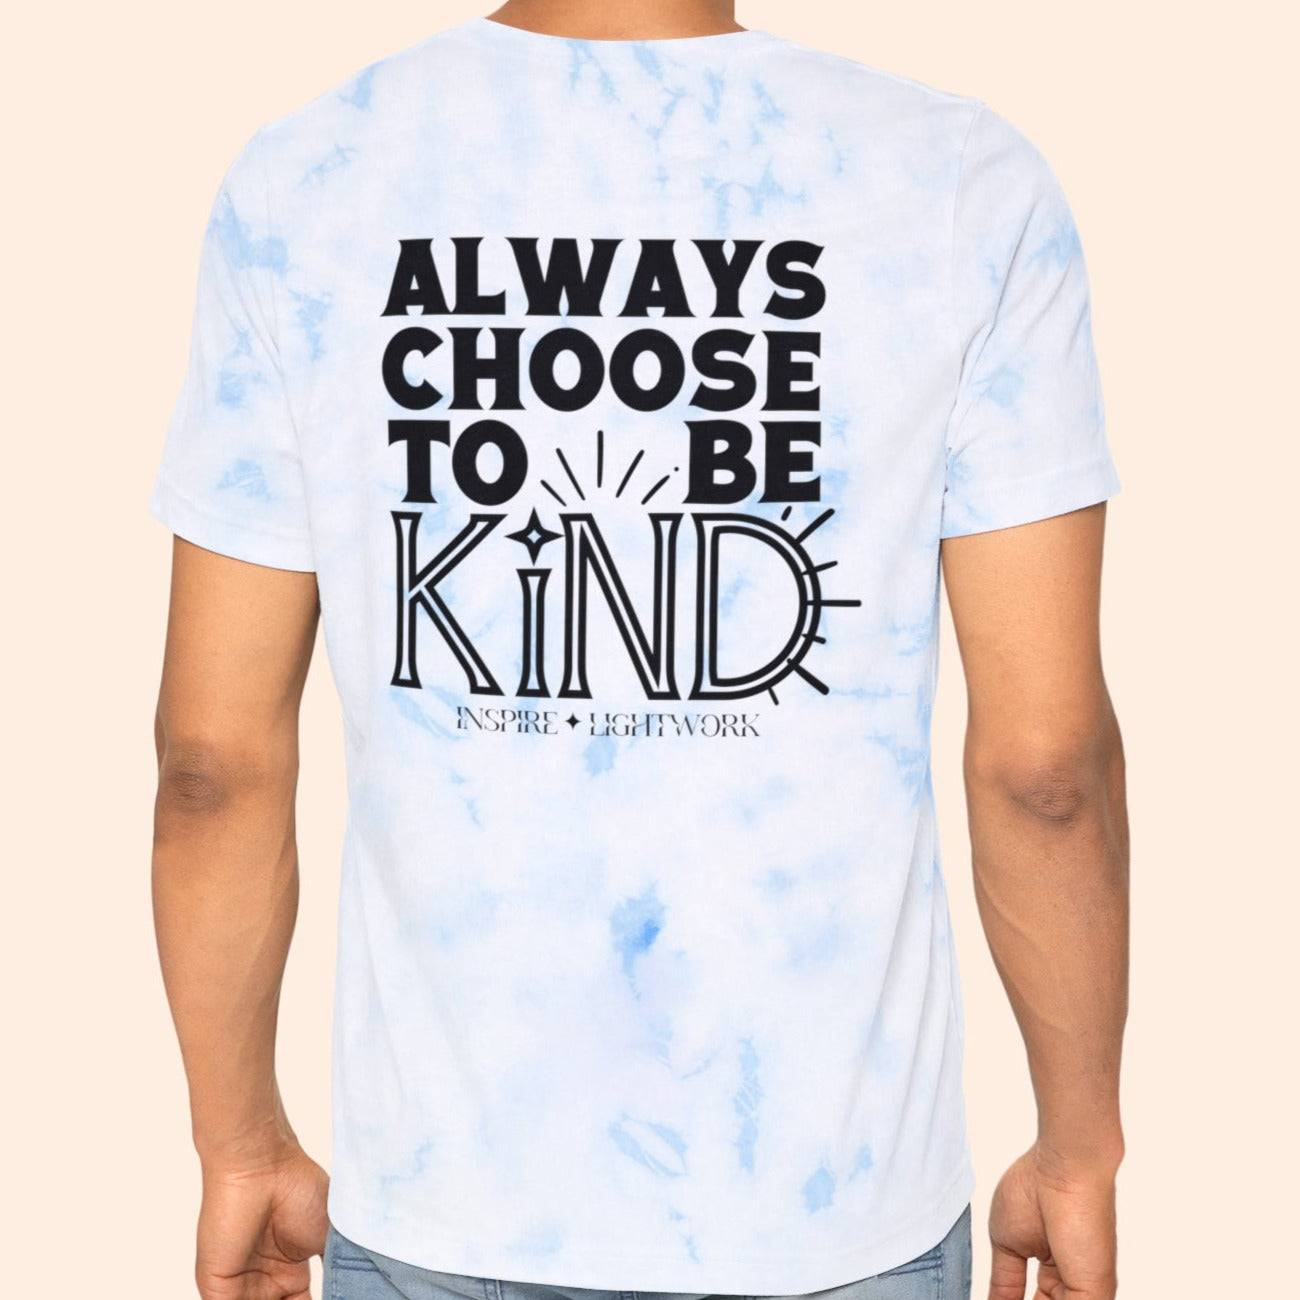 Camiseta Siempre elige ser amable